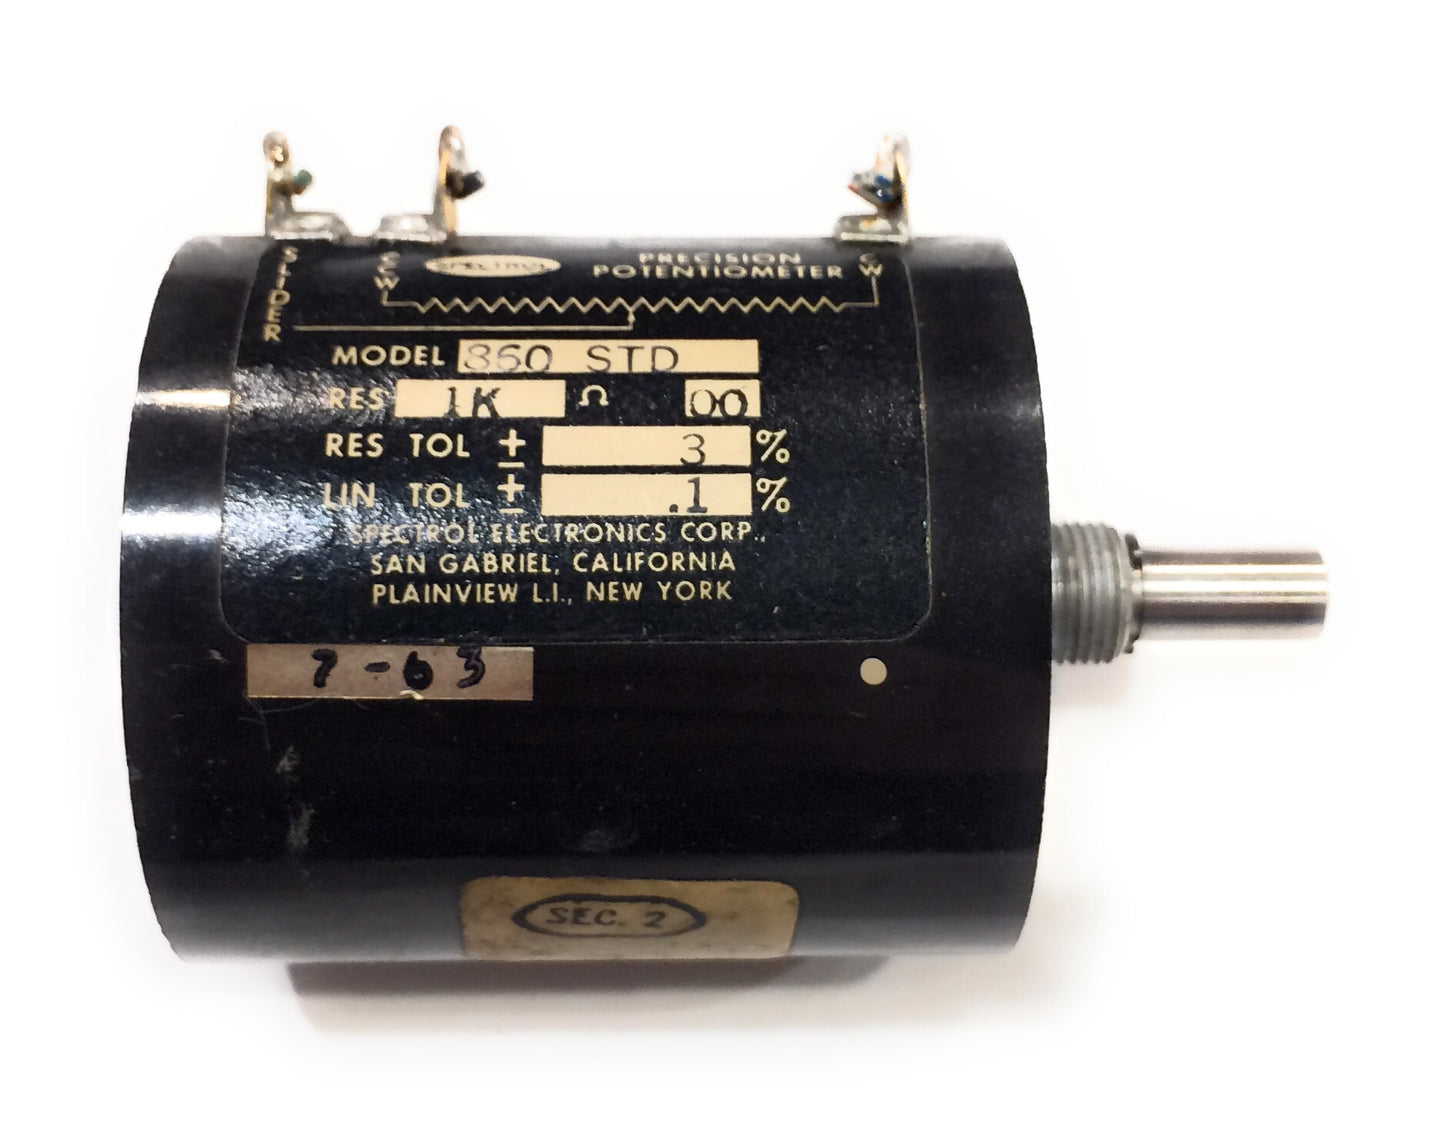 Vintage Used Precision Potentiometer